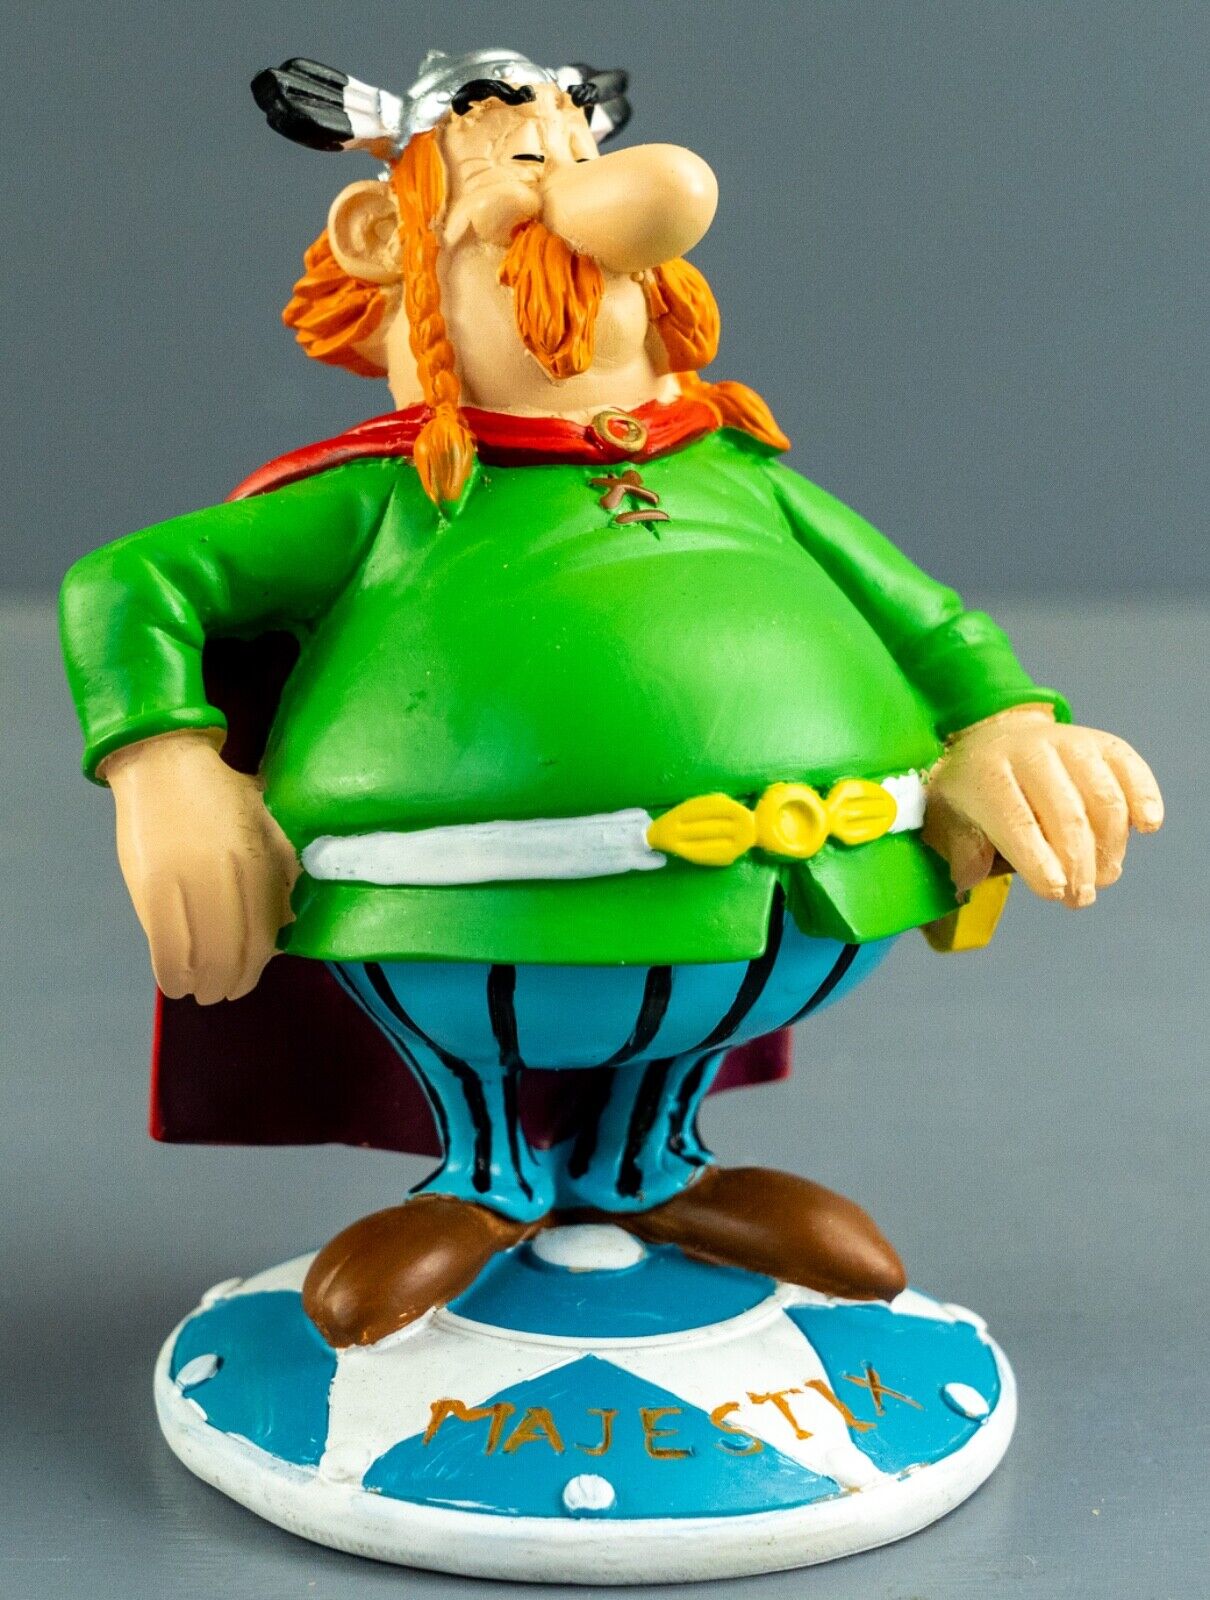 Plastoy Asterix Figurine #41 Vitalstatistix Editions Rene 14cm Model Figure